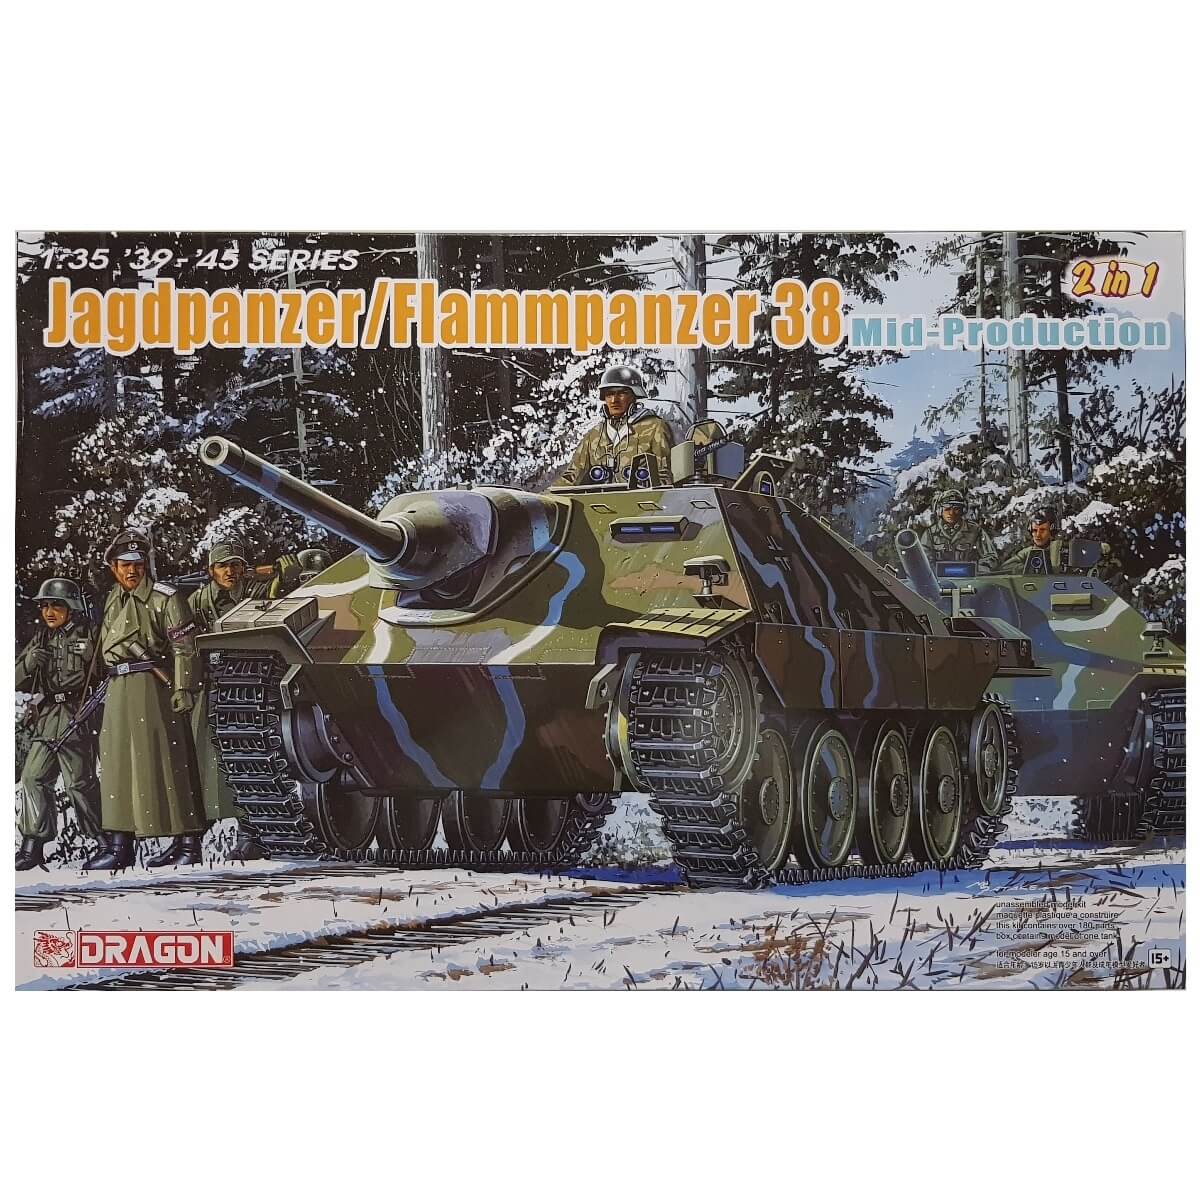 1:35 Jagdpanzer / Flammpanzer 38 - Mid Production - DRAGON